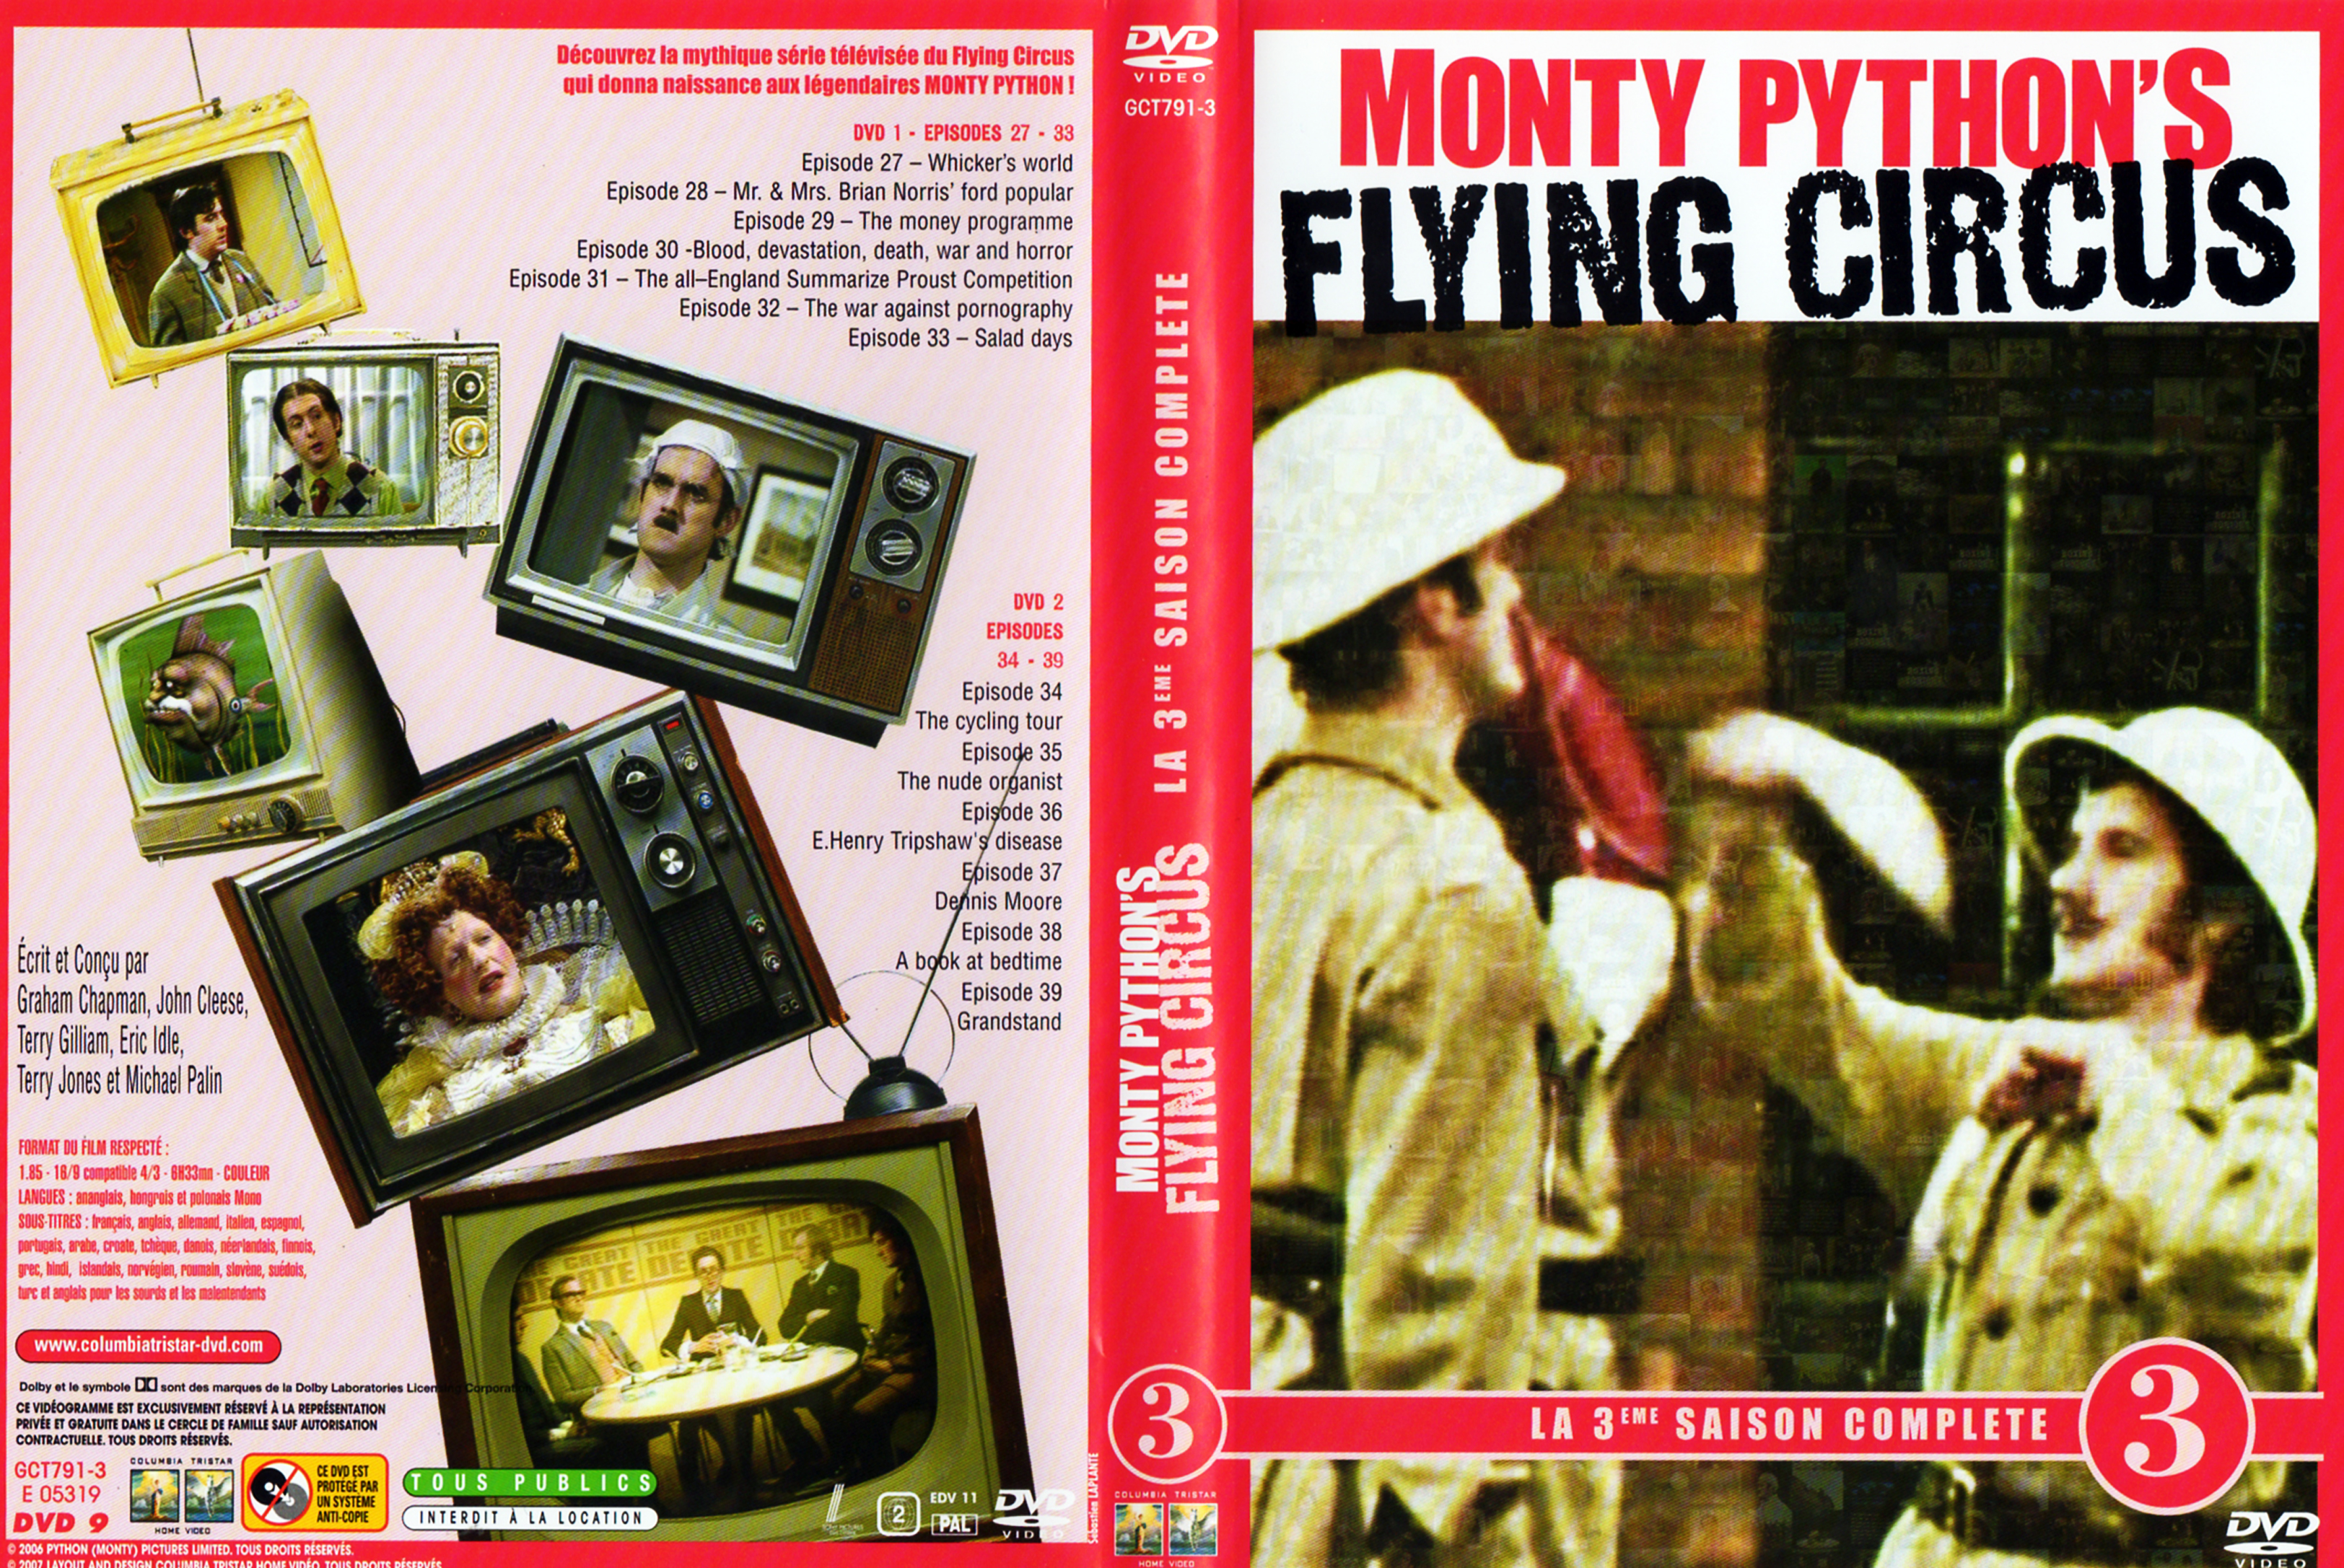 Jaquette DVD Monty Python - flying circus Saison 3